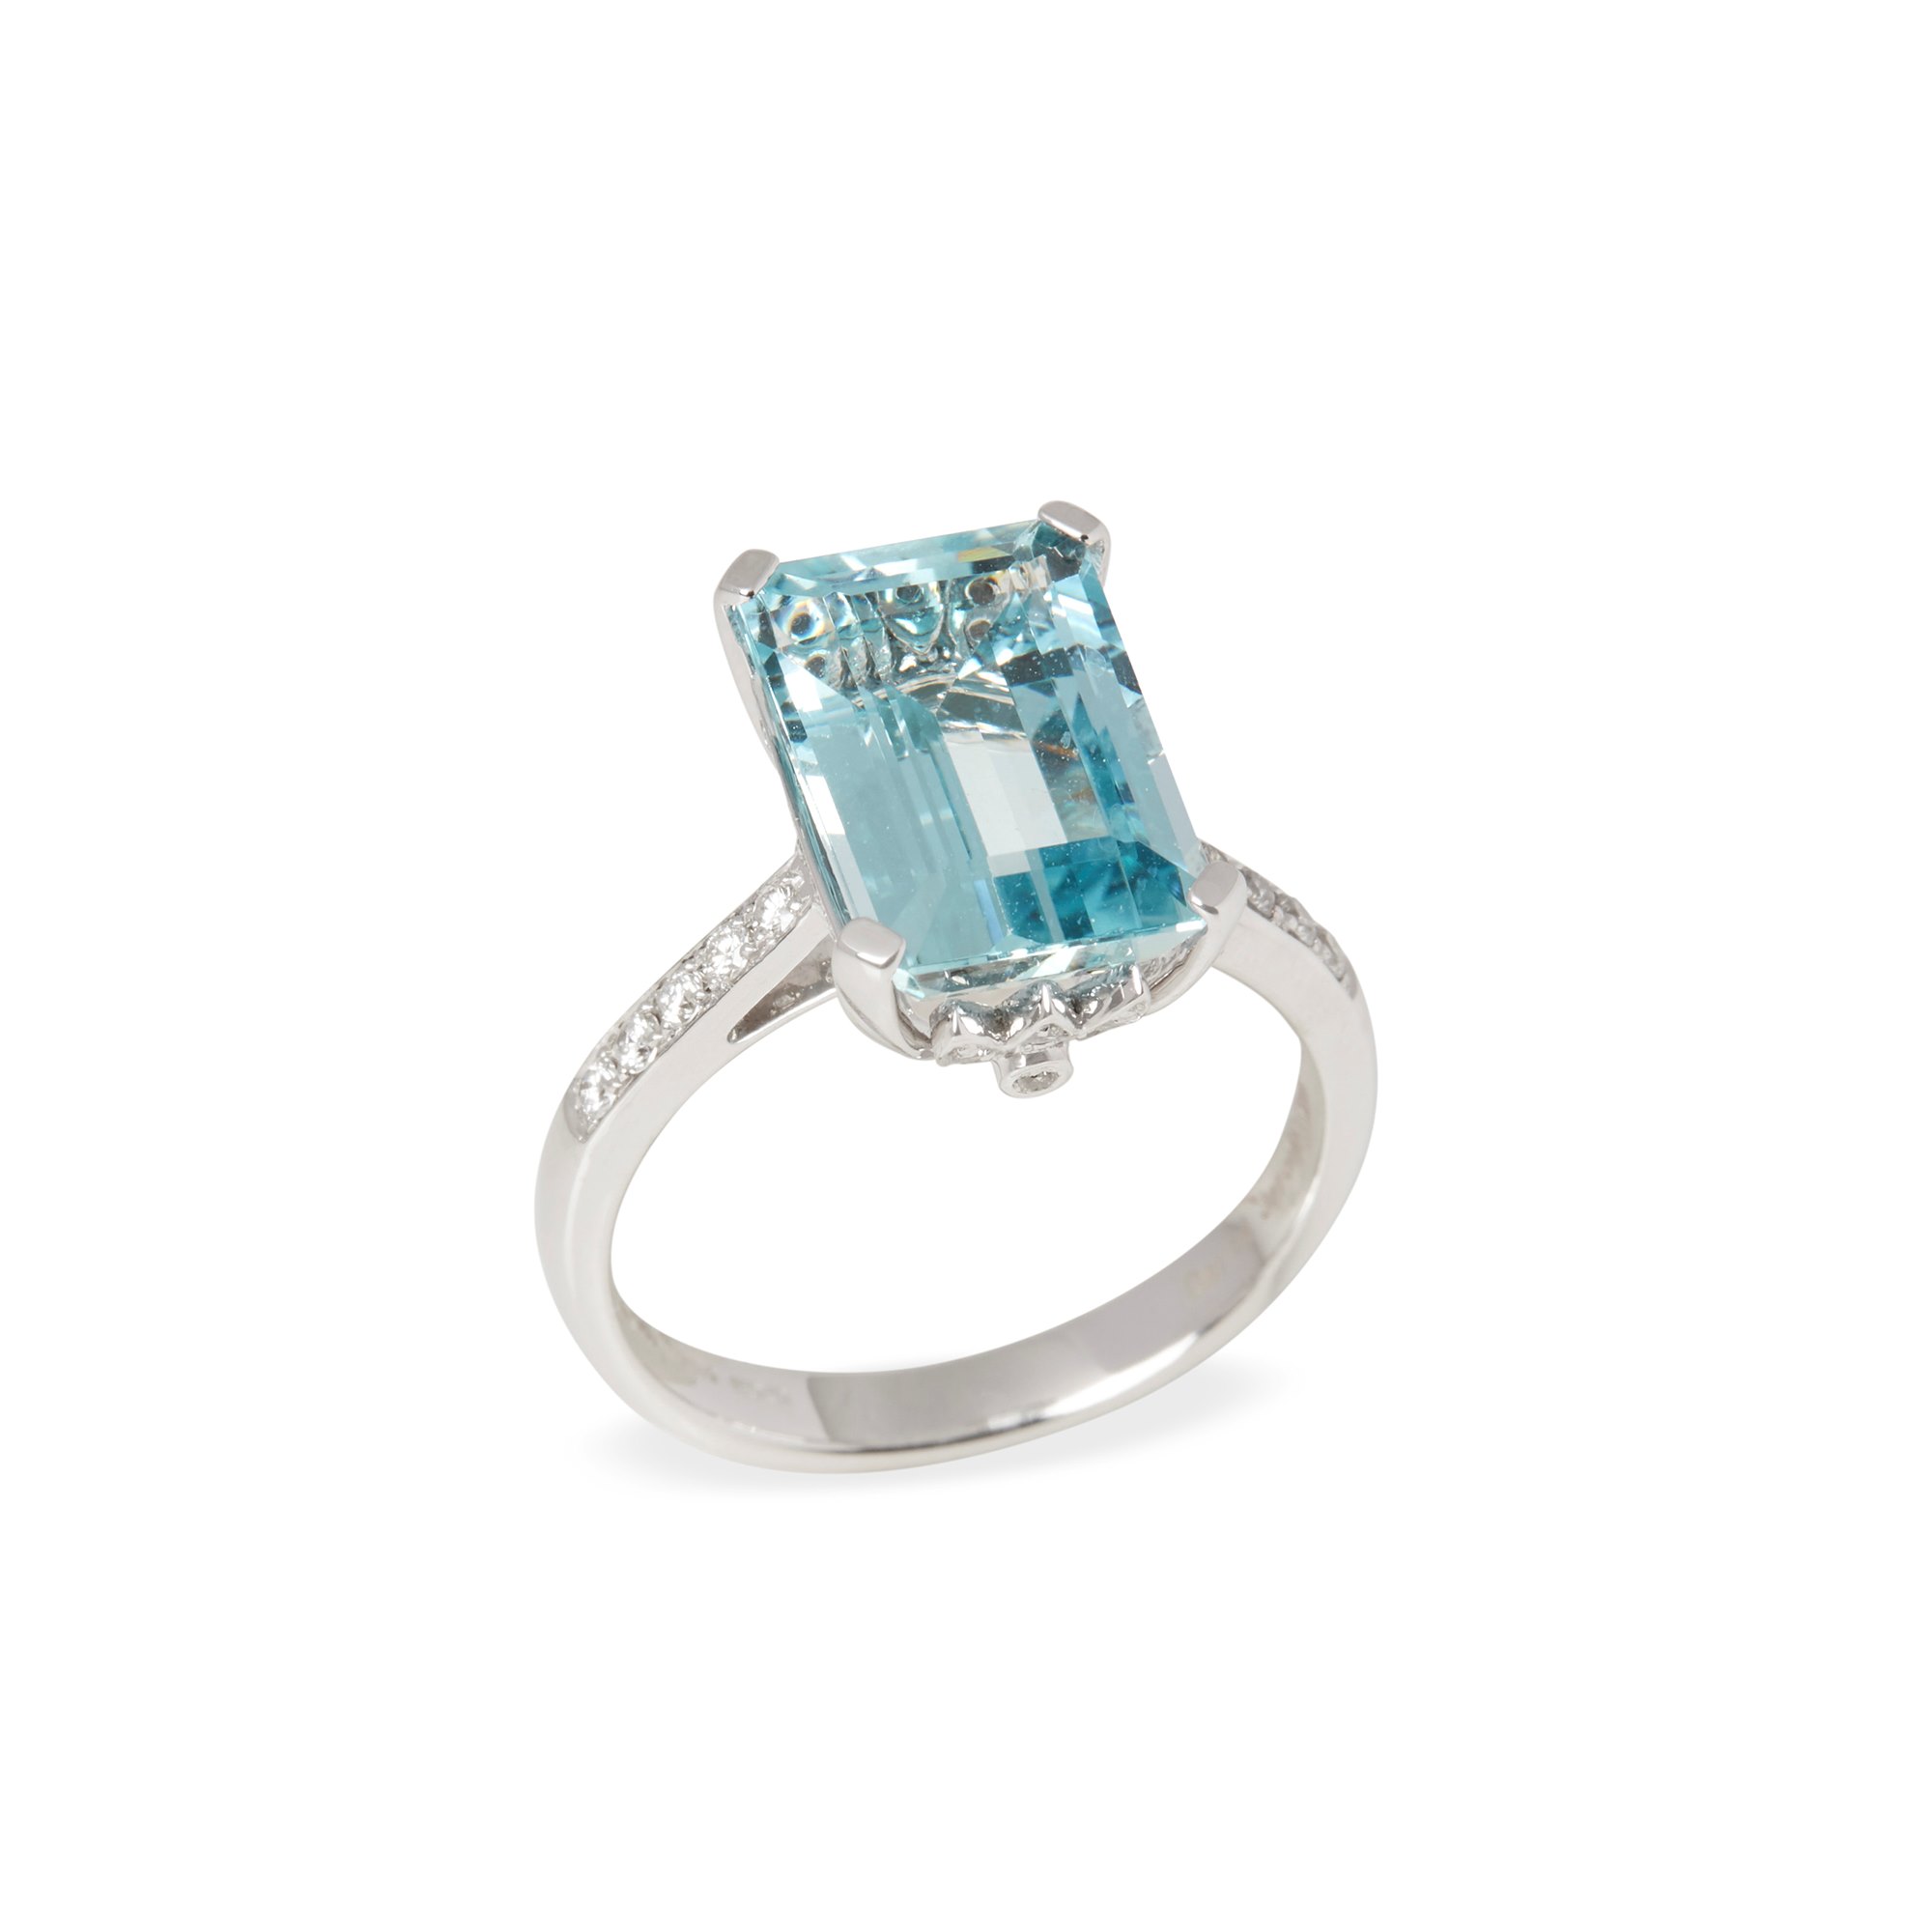 David Jerome Certified 5.61ct Emerald Cut Brazilian Aquamarine and Diamond 18ct Gold Ring